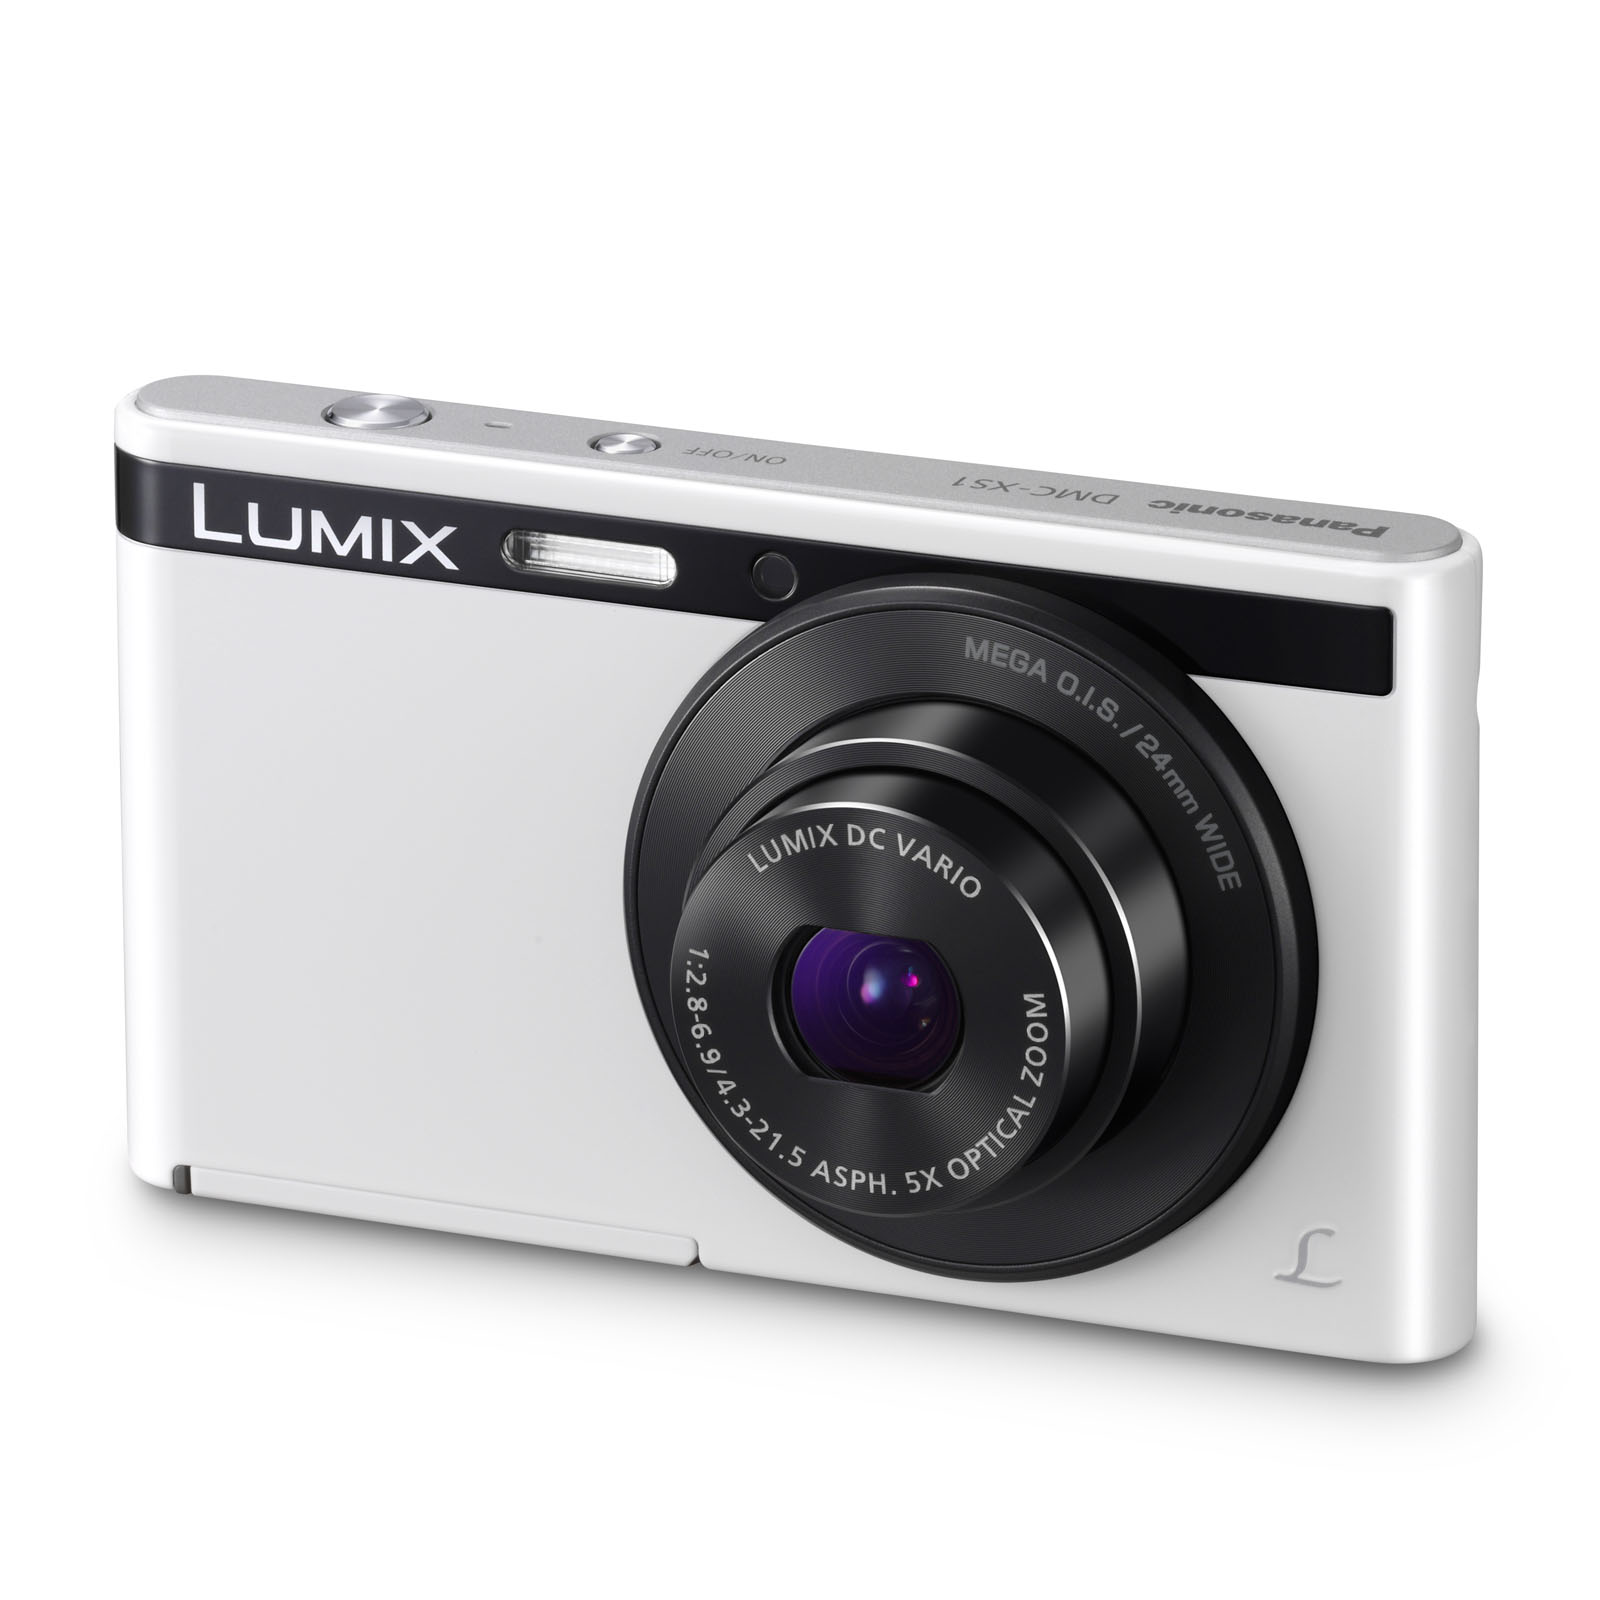 Panasonic Lumix 16.1MP Super Slim Creative Pocketable Camera with 5x Optical Zoom-White 1/2.33